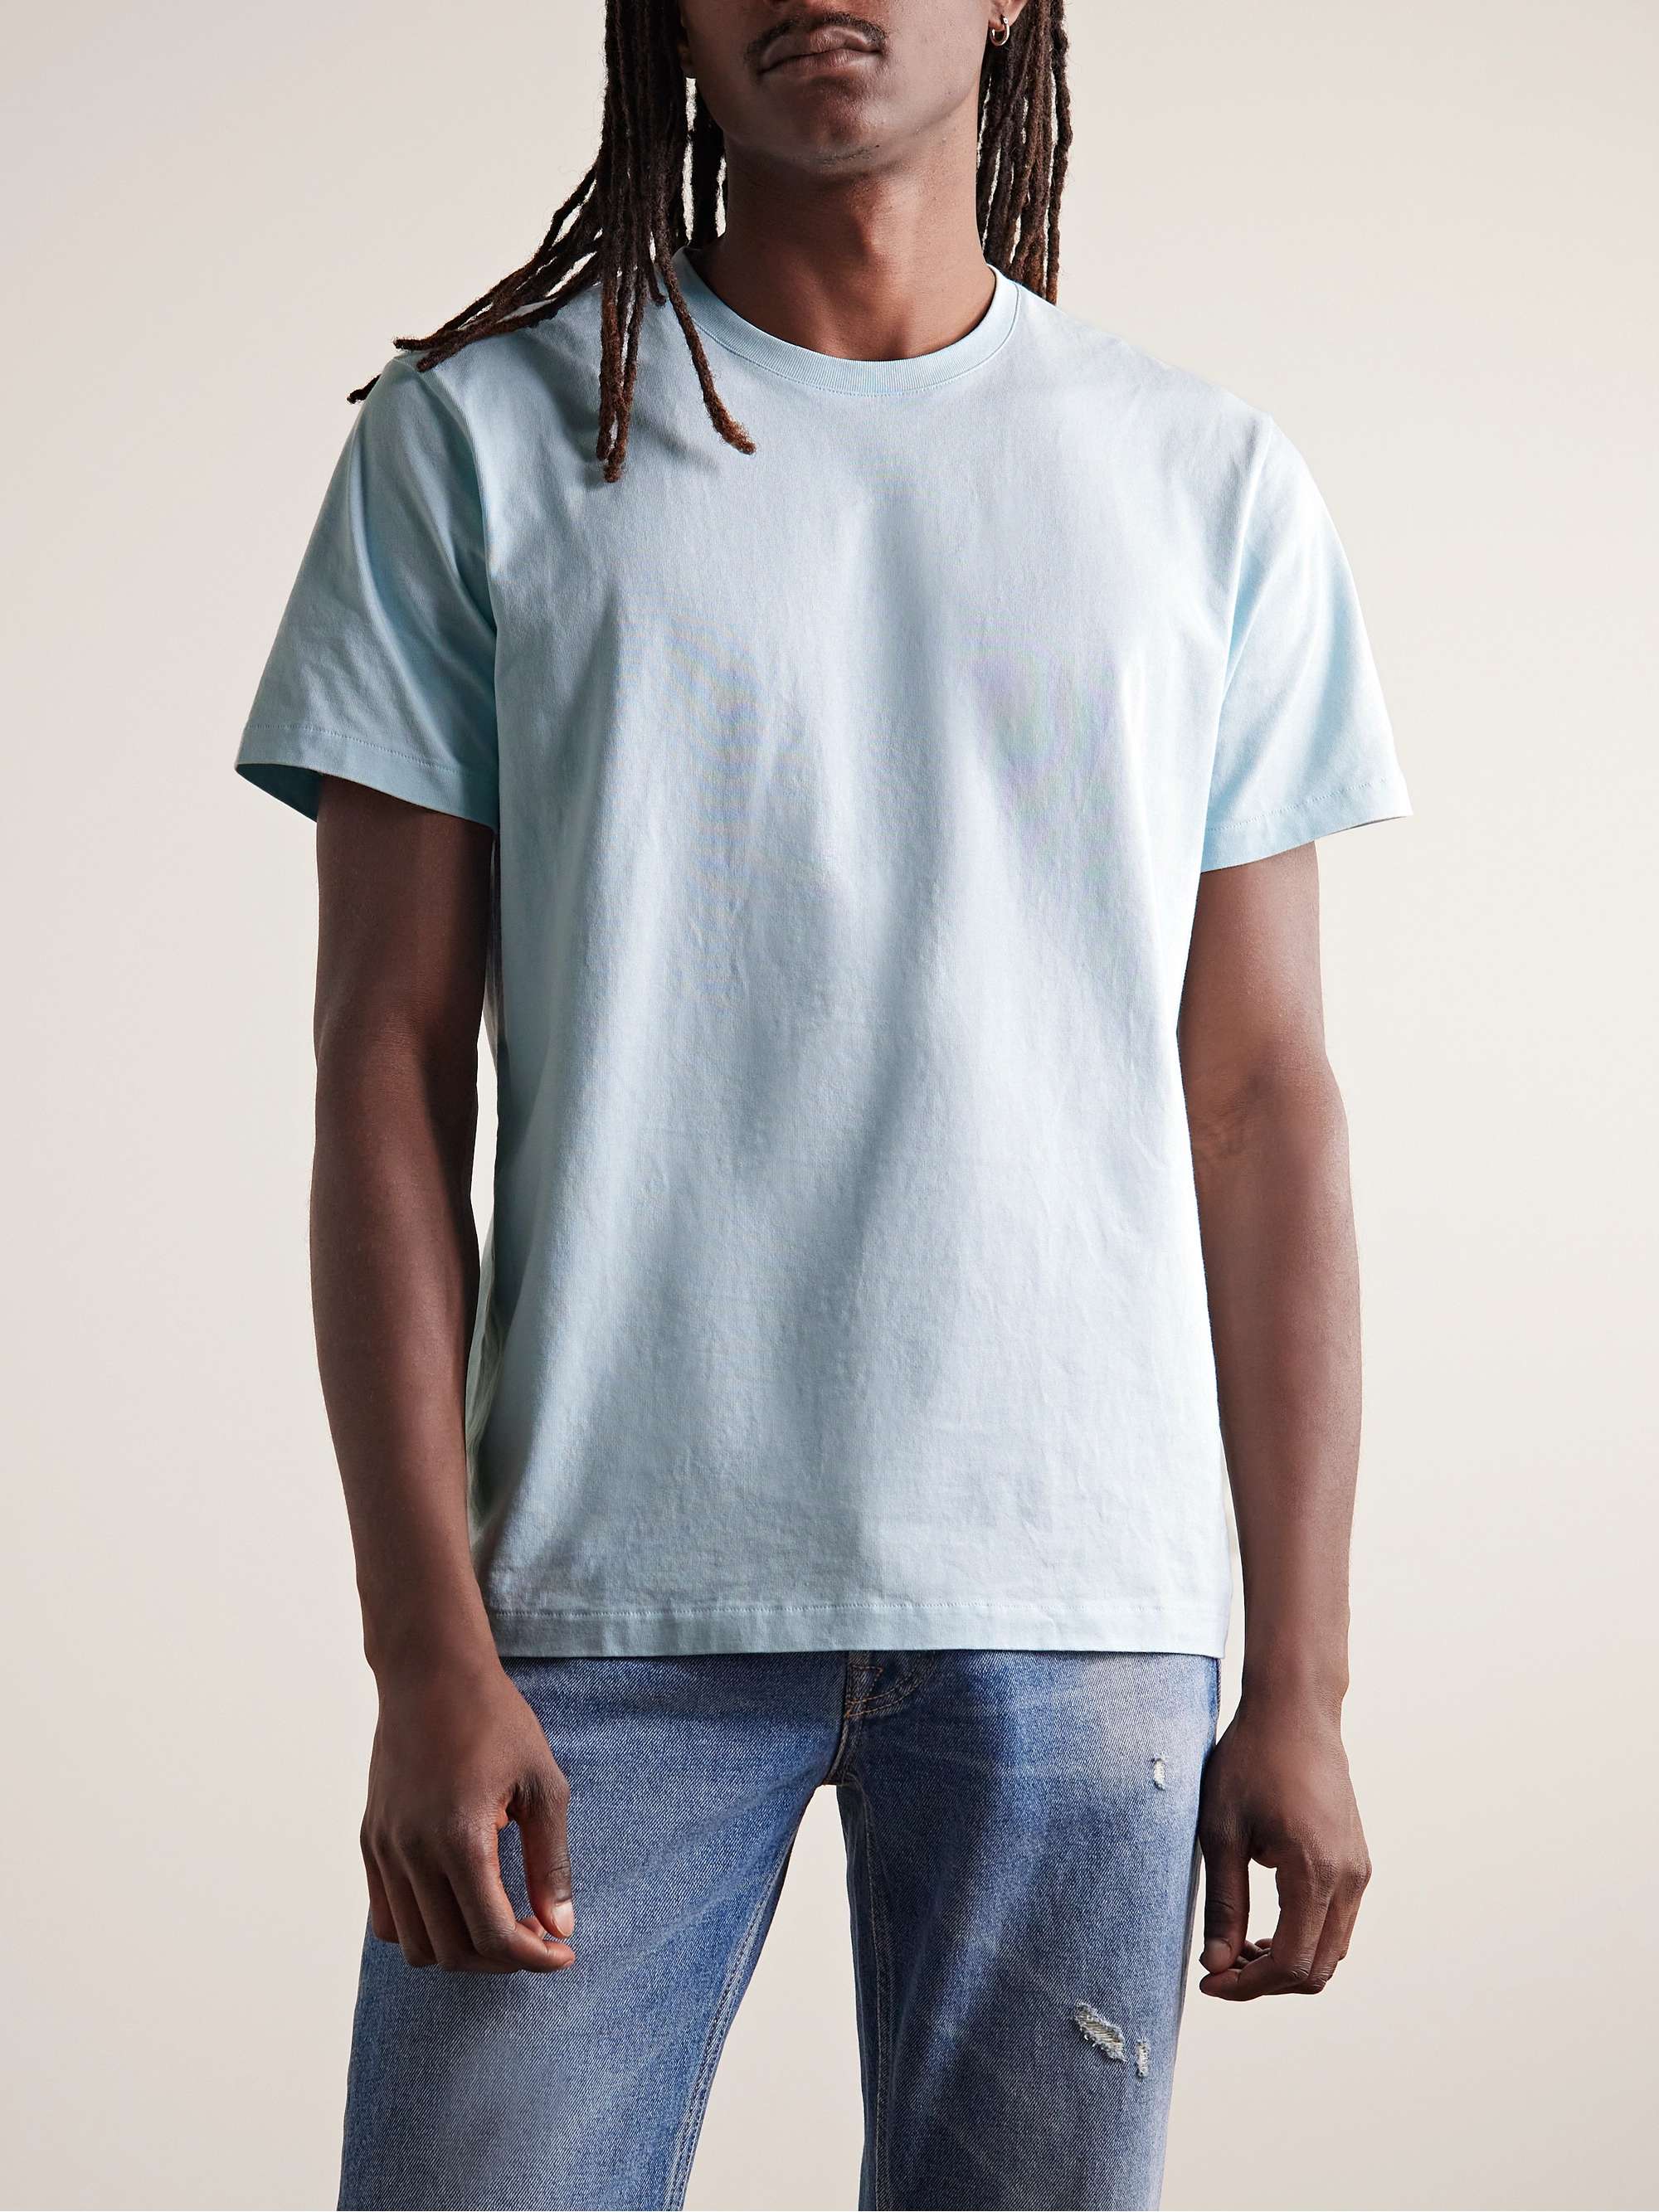 FRAME Cotton-Jersey T-Shirt for Men | MR PORTER